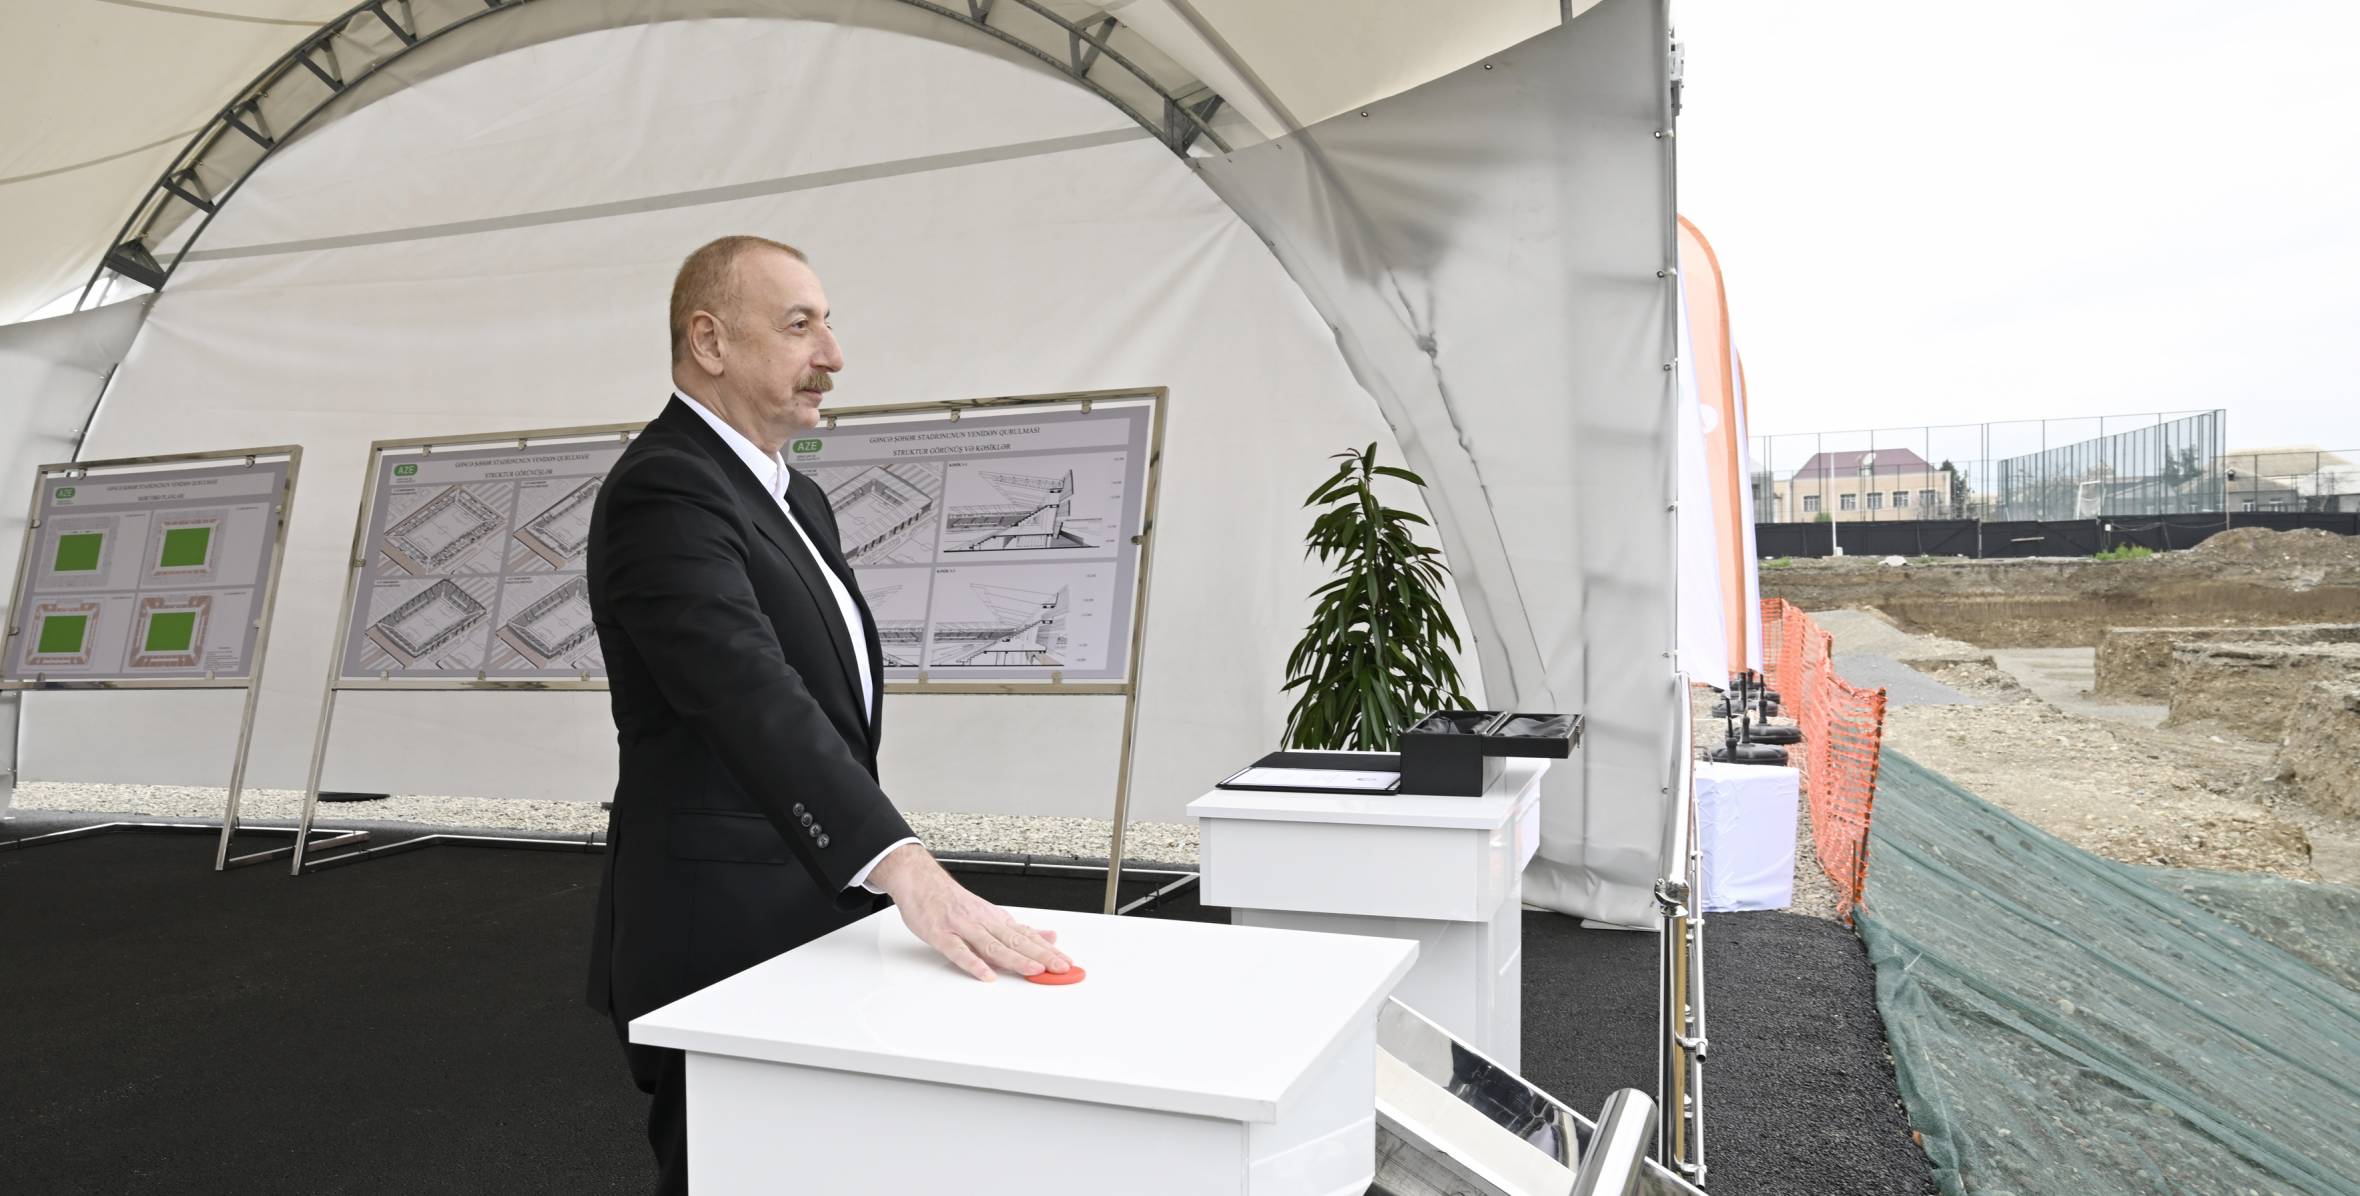 Ilham Aliyev has laid the foundation stone for the Ganja City Stadium